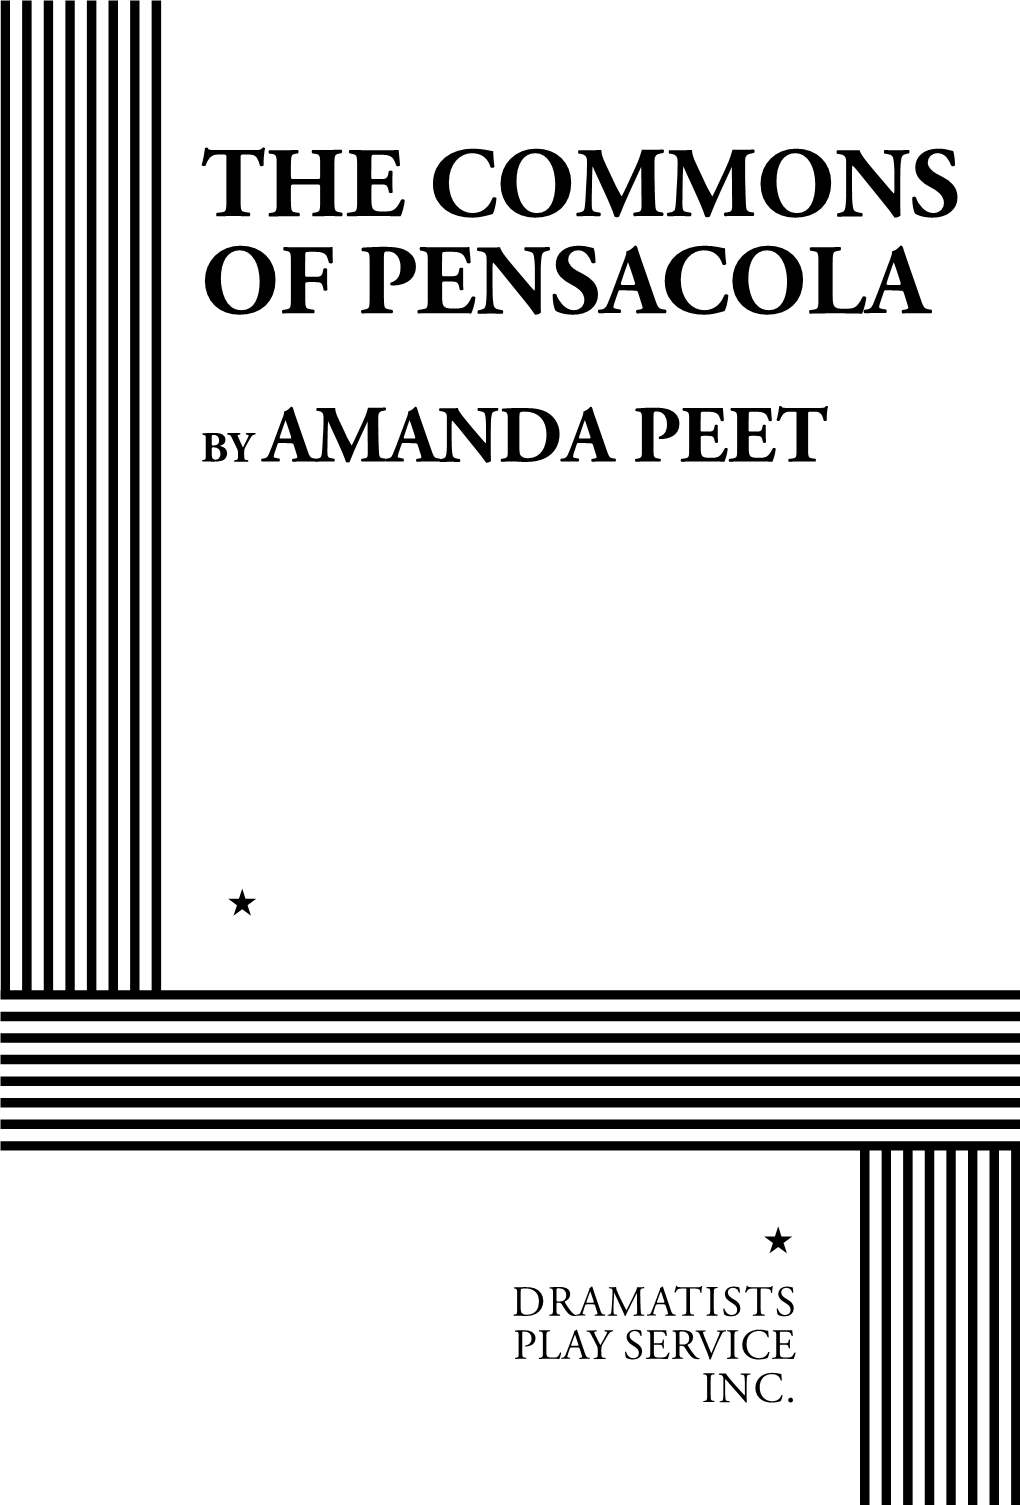 THE COMMONS of PENSACOLA by Amanda Peet